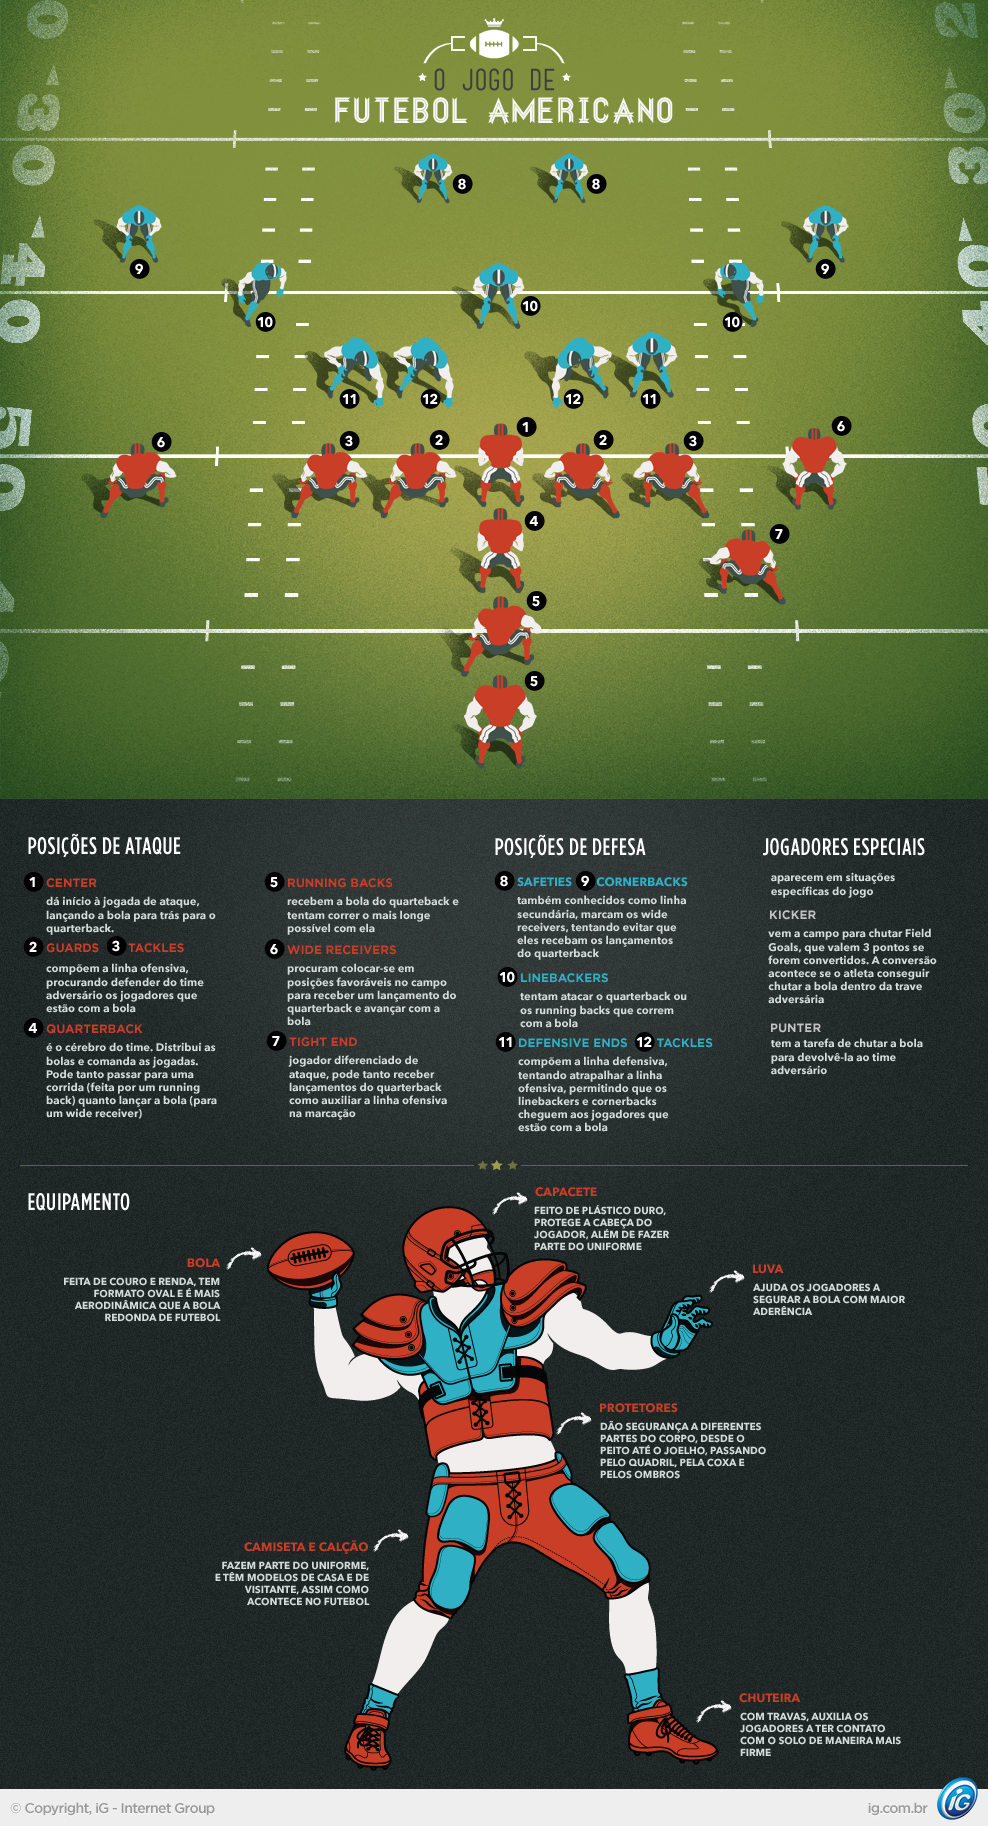 Guia da NFL: entenda como funciona o futebol americano, futebol americano